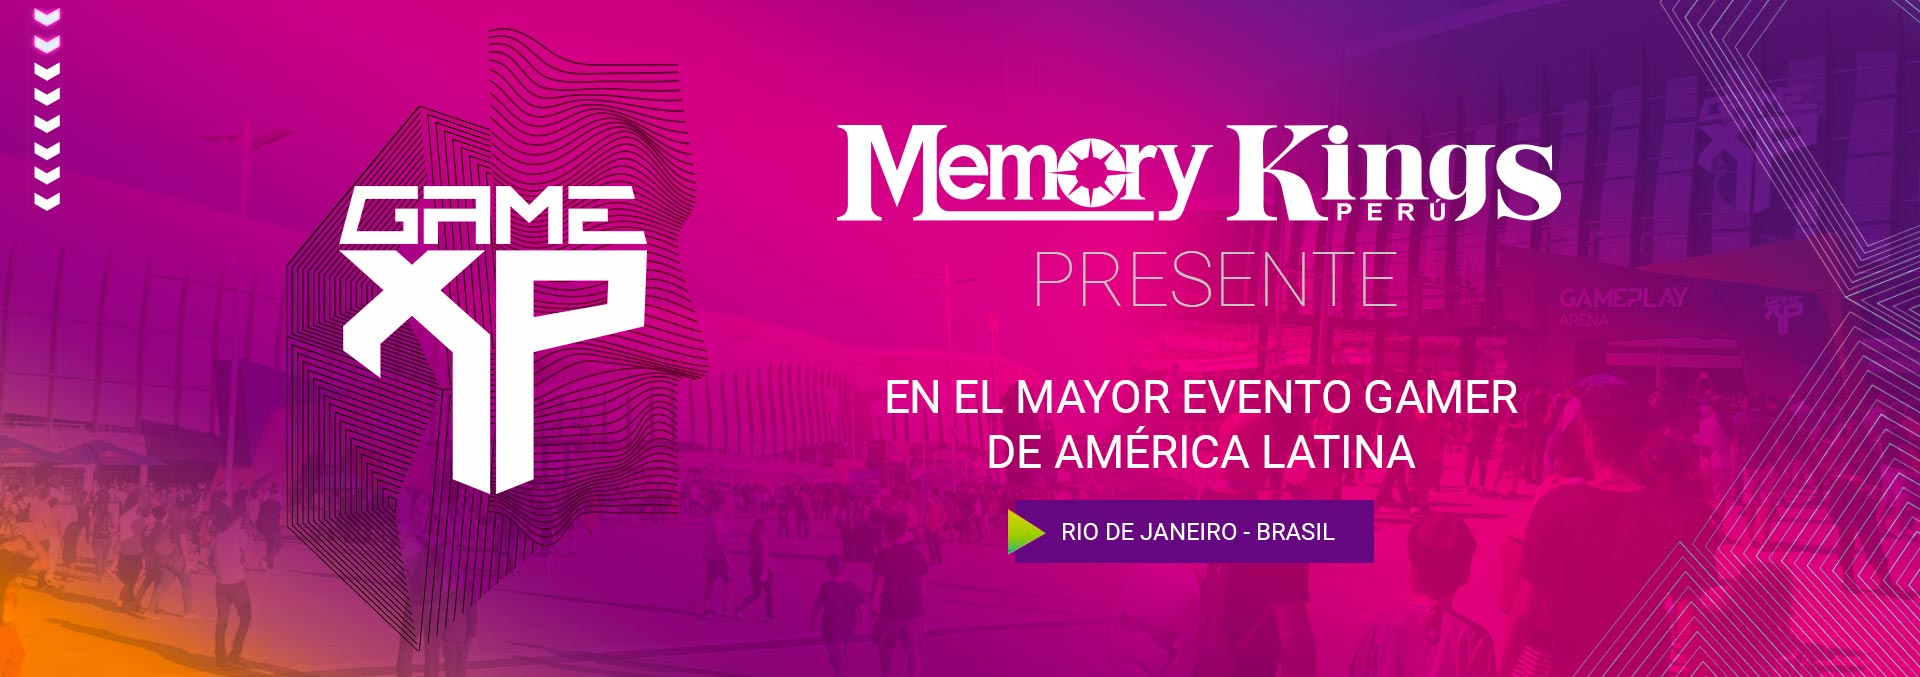 CUARTO ESPECIAL - MEMORY KINGS EN EL EVENTO GAMER MAS GRANDE DEL MUNDO GAME XP - RIO DE JANEIRO BRASIL